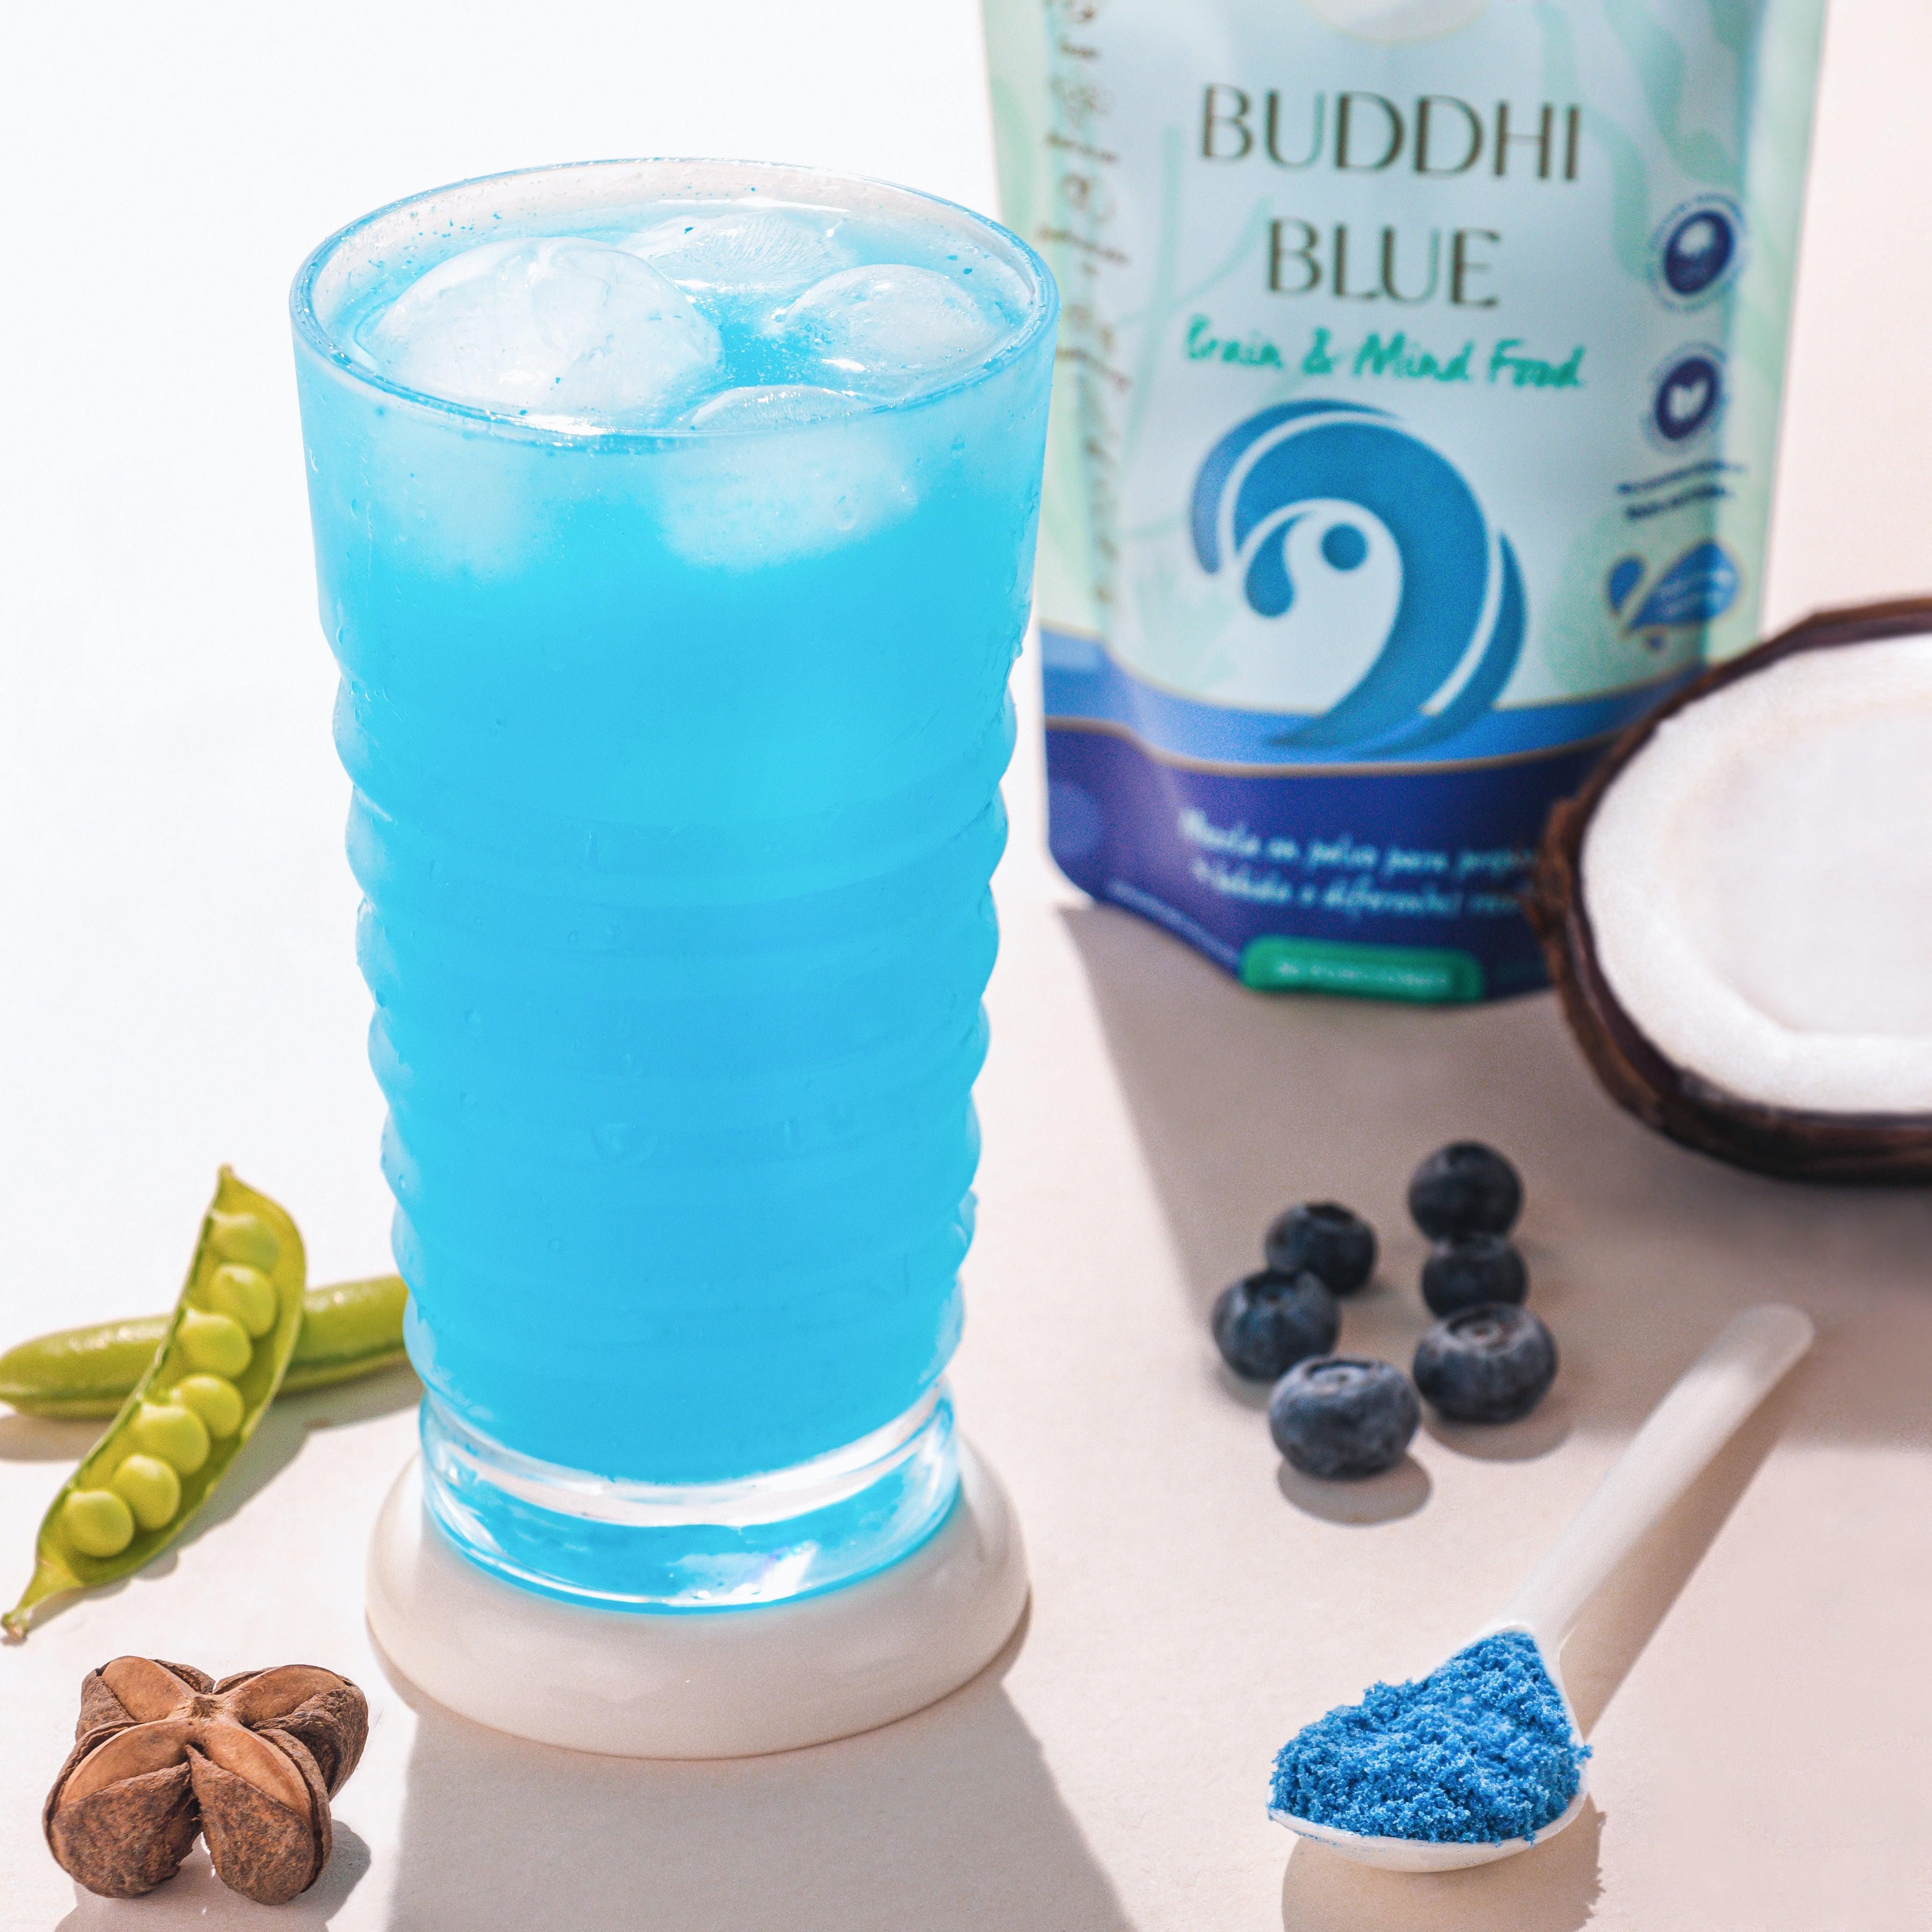 PADAM Buddhi Blue